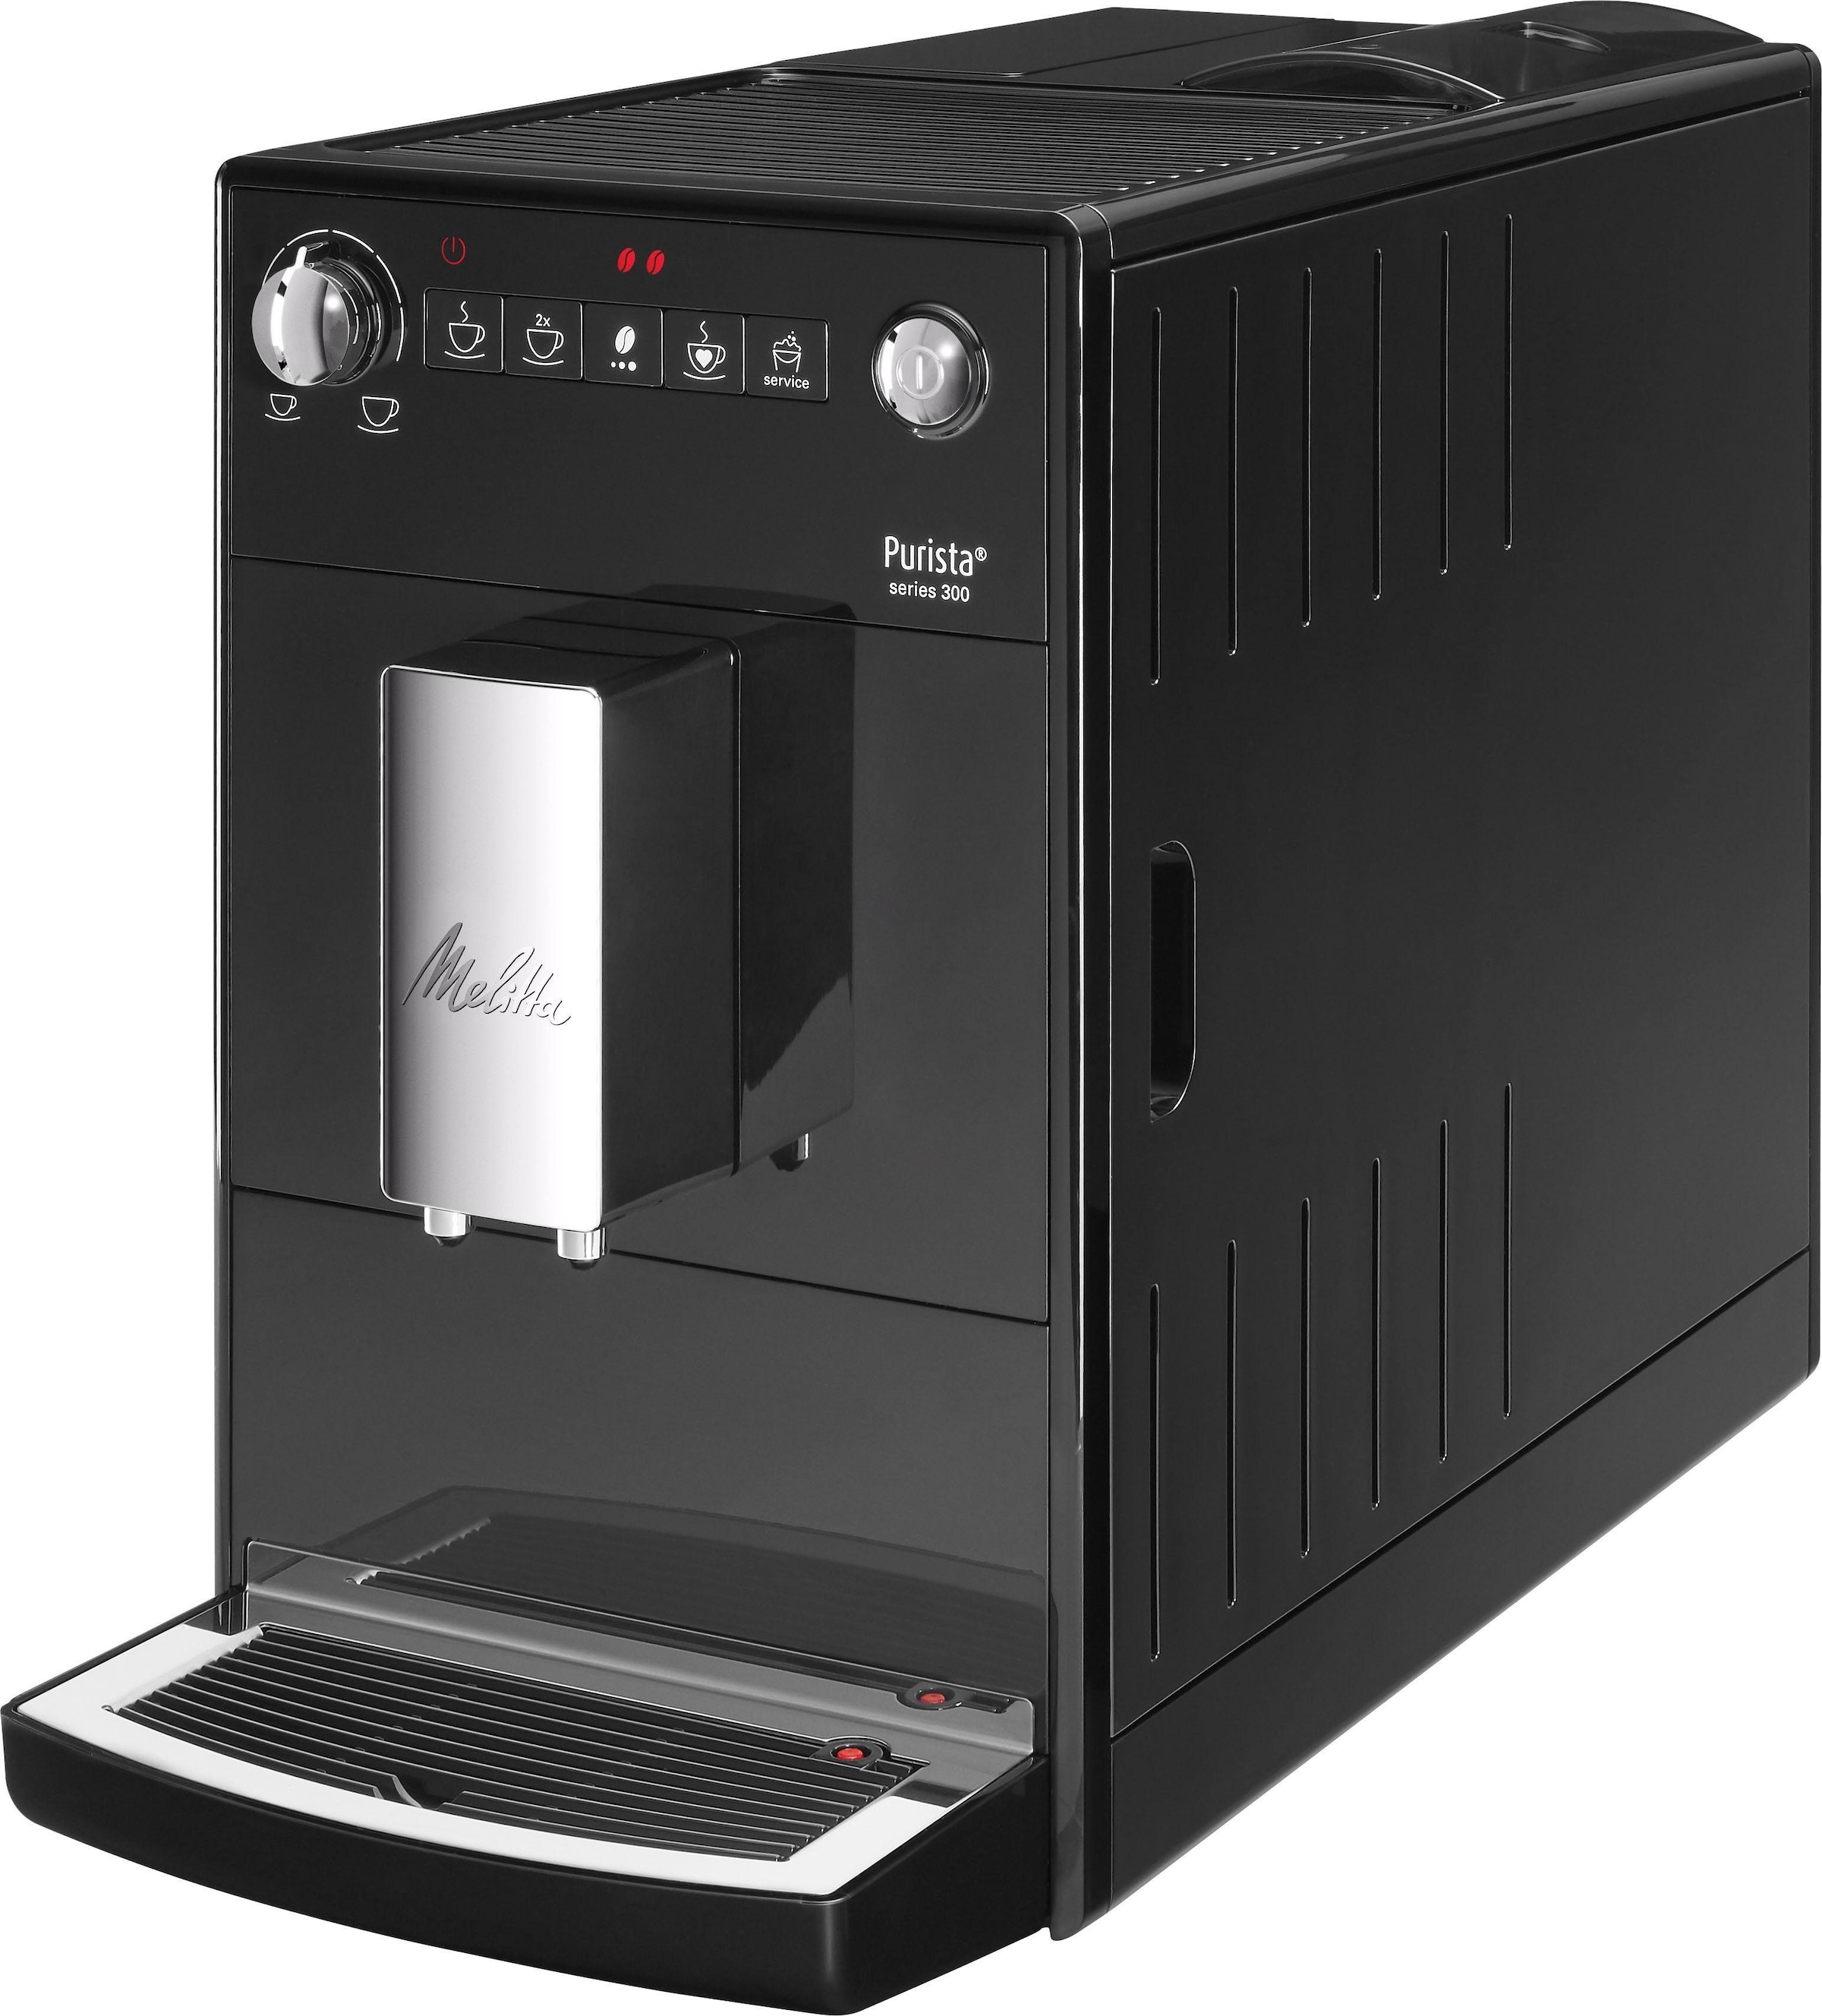 & Melitta BAUR F230-102, | Kaffeevollautomat »Purista® extra leise Lieblingskaffee-Funktion, kompakt schwarz«,